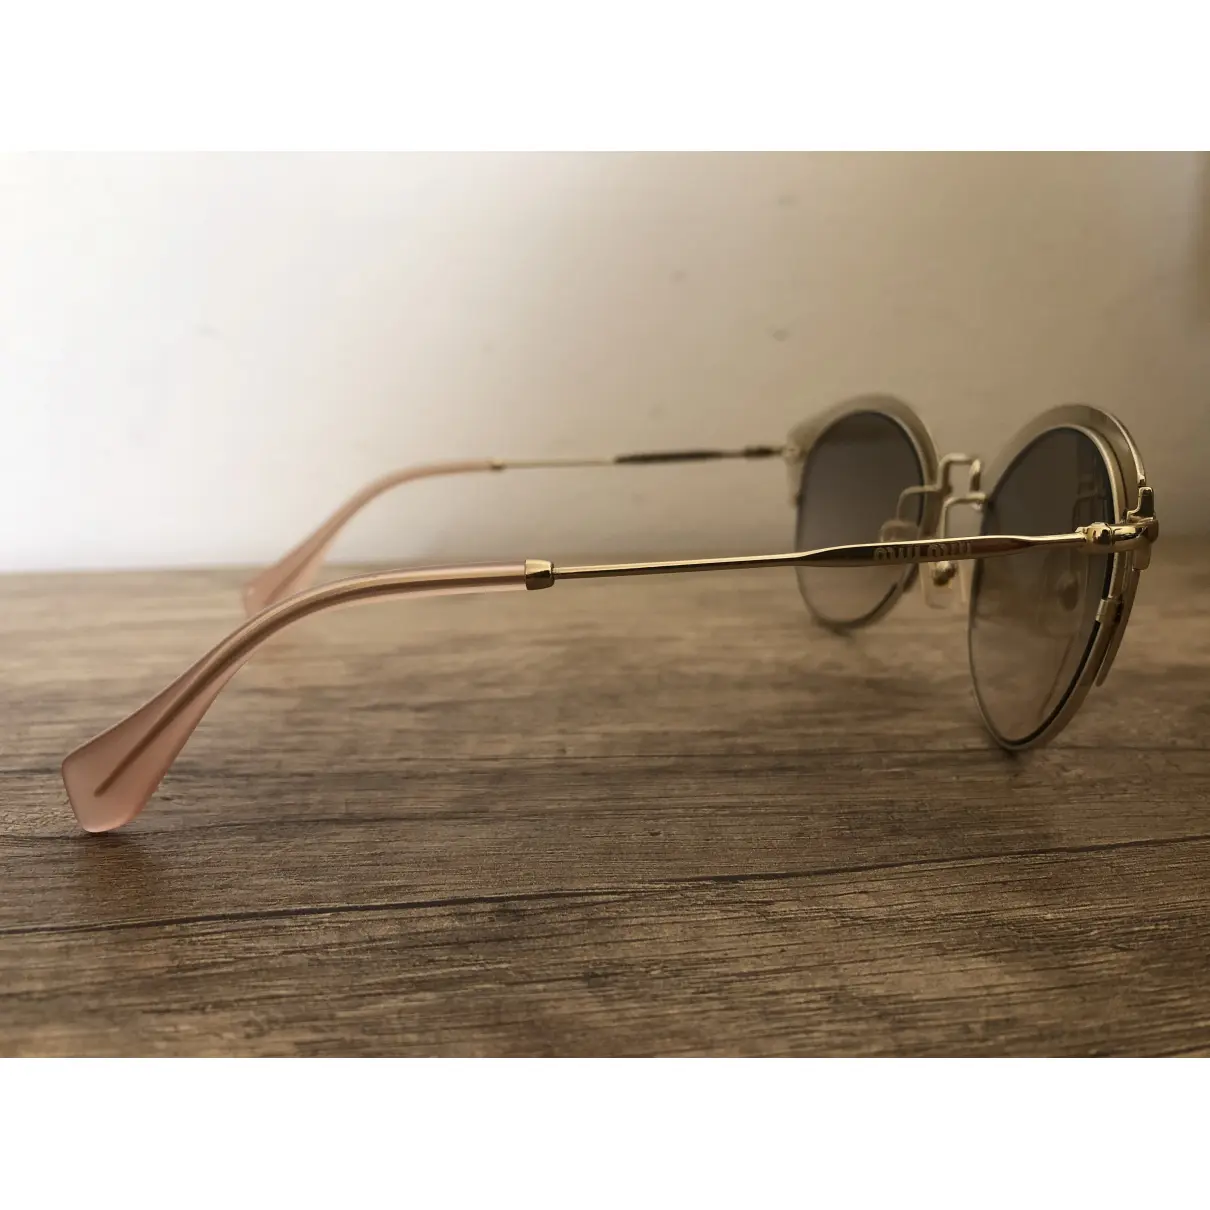 Buy Miu Miu Sunglasses online